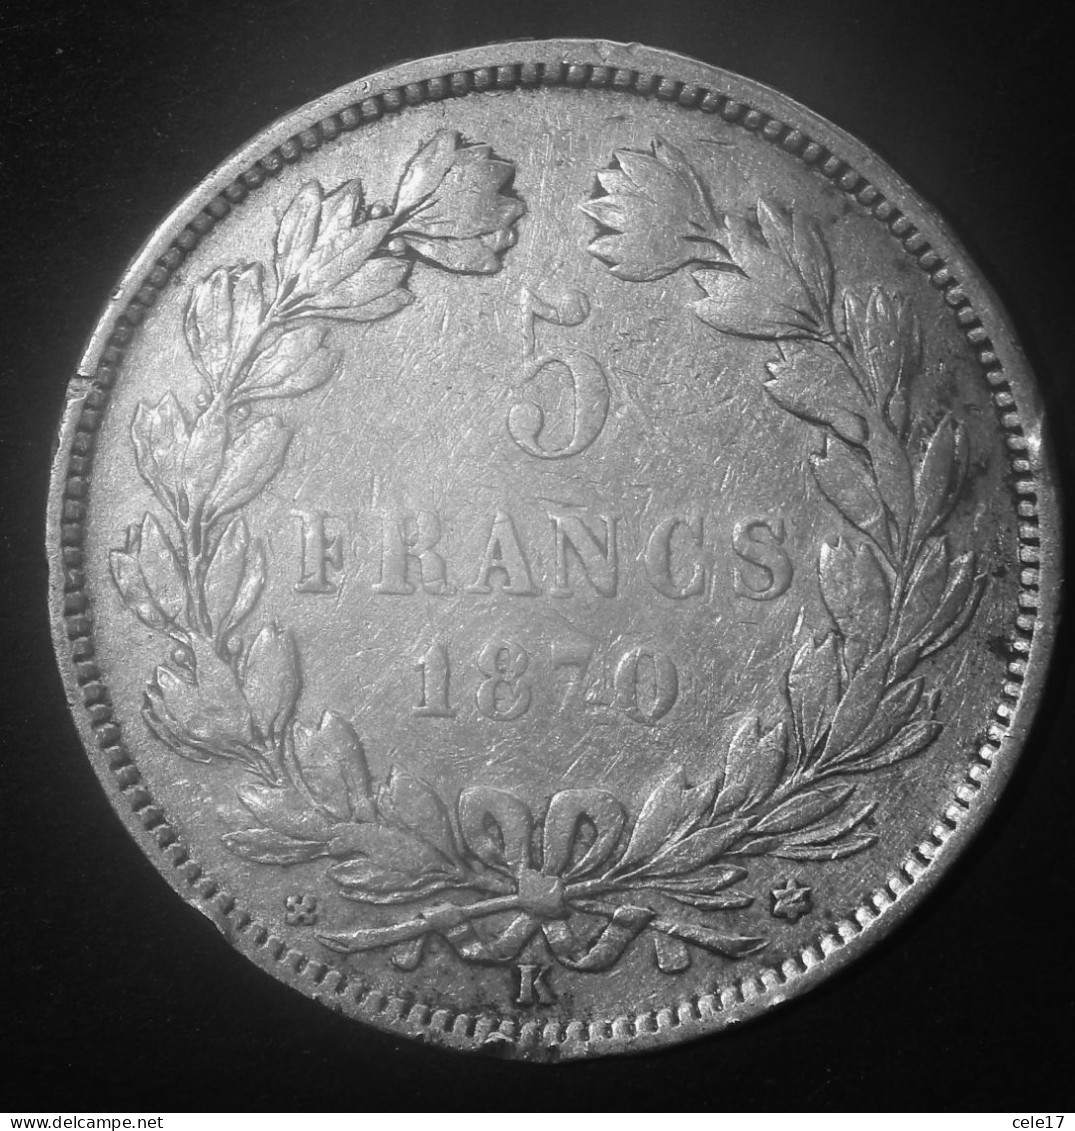 FRANCIA- CERES 5 FRANCHI 1870 ARGENTO- M/star- KM812.2 - 1870-1871 Kabinett Trochu